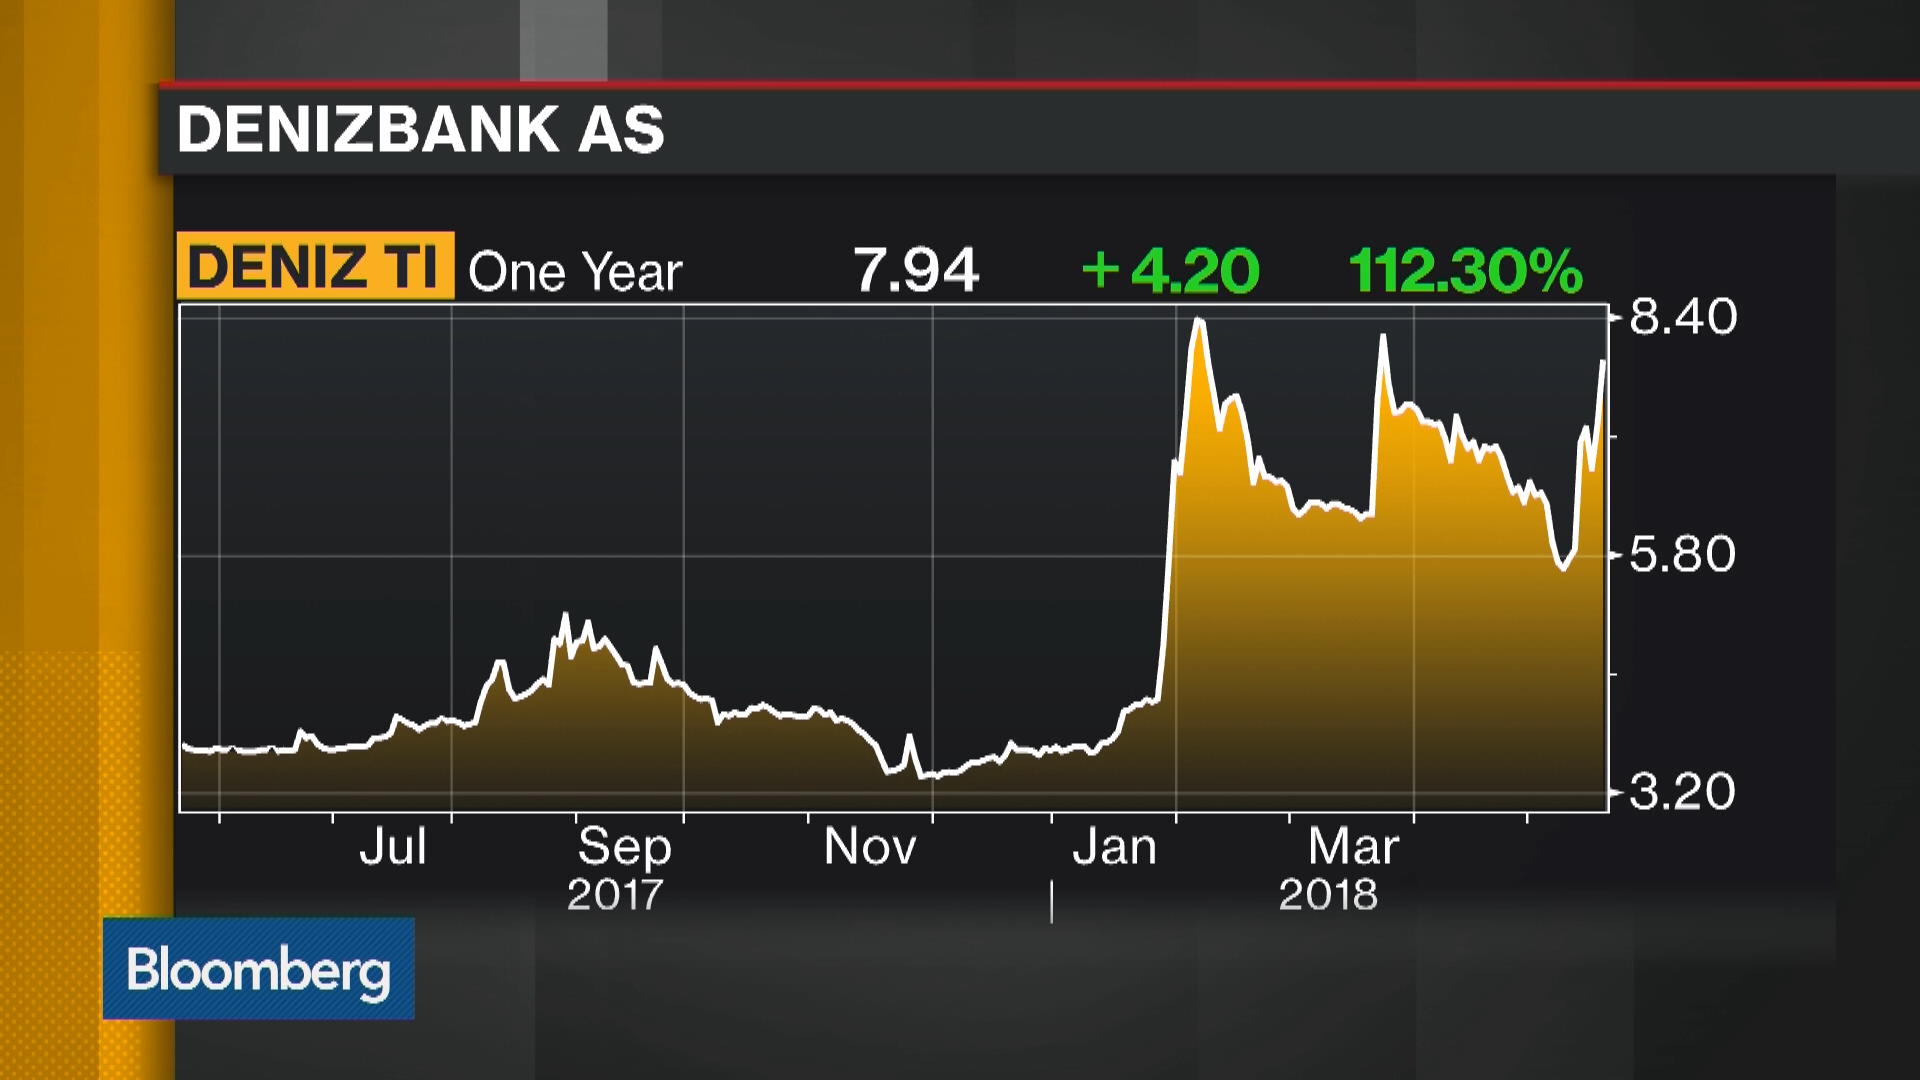 Sberbank Stock Price Chart